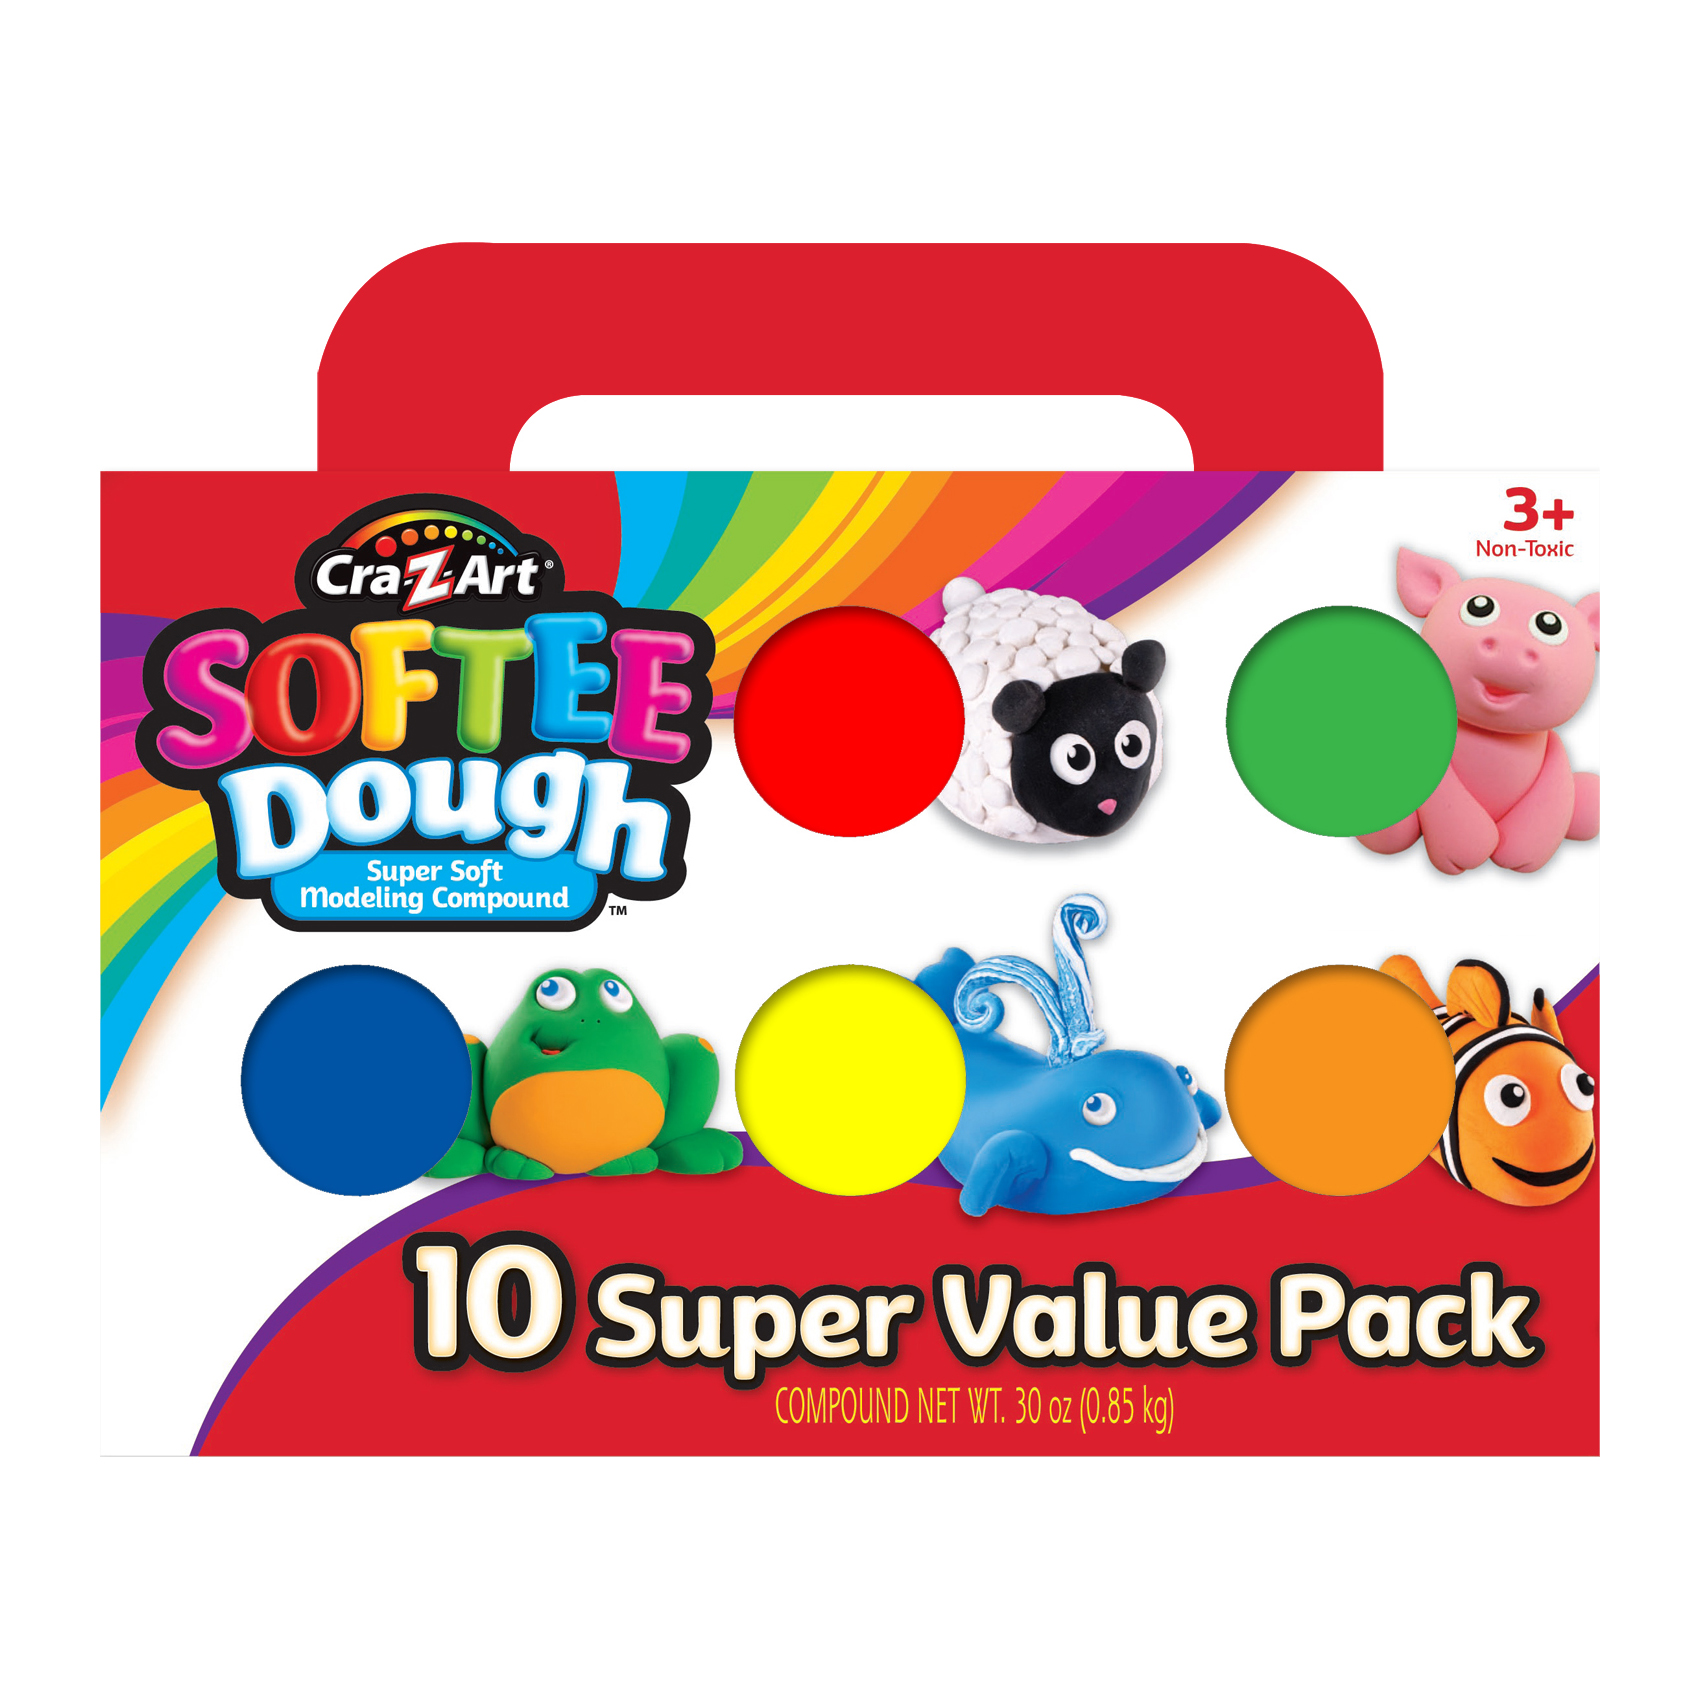 Softee Dough - 10 Super Value Pack